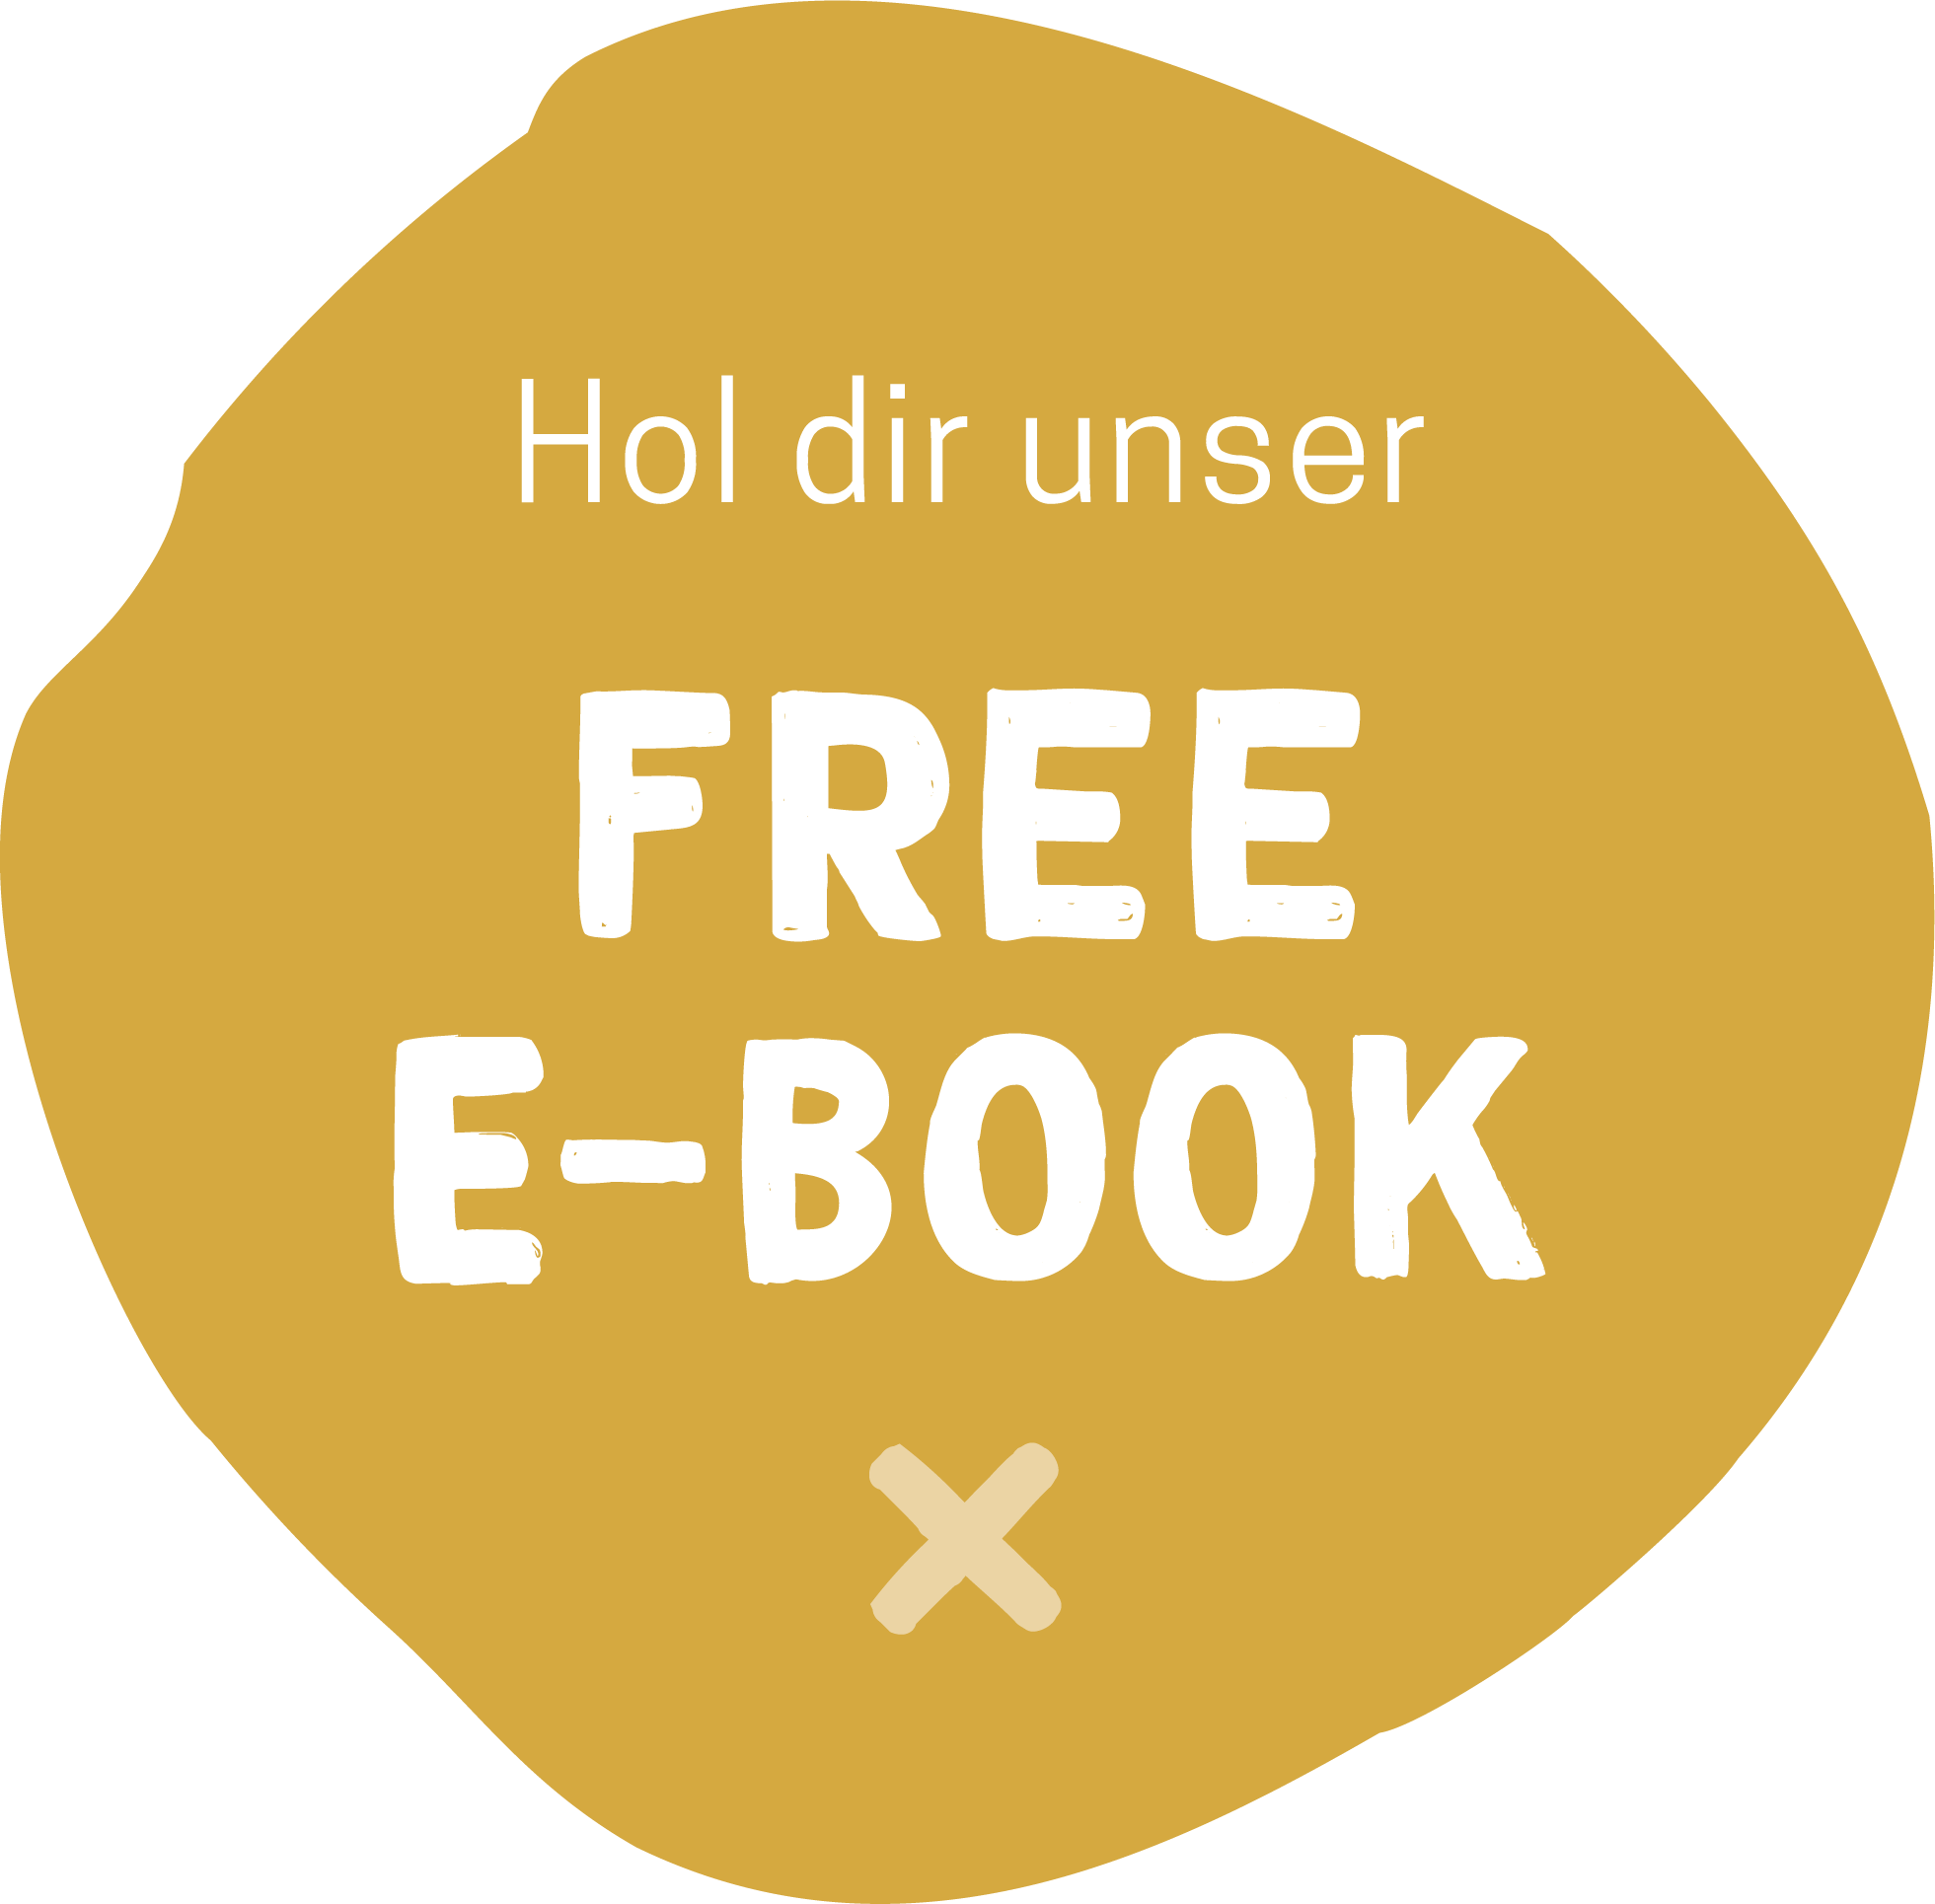 Free E-Book Button